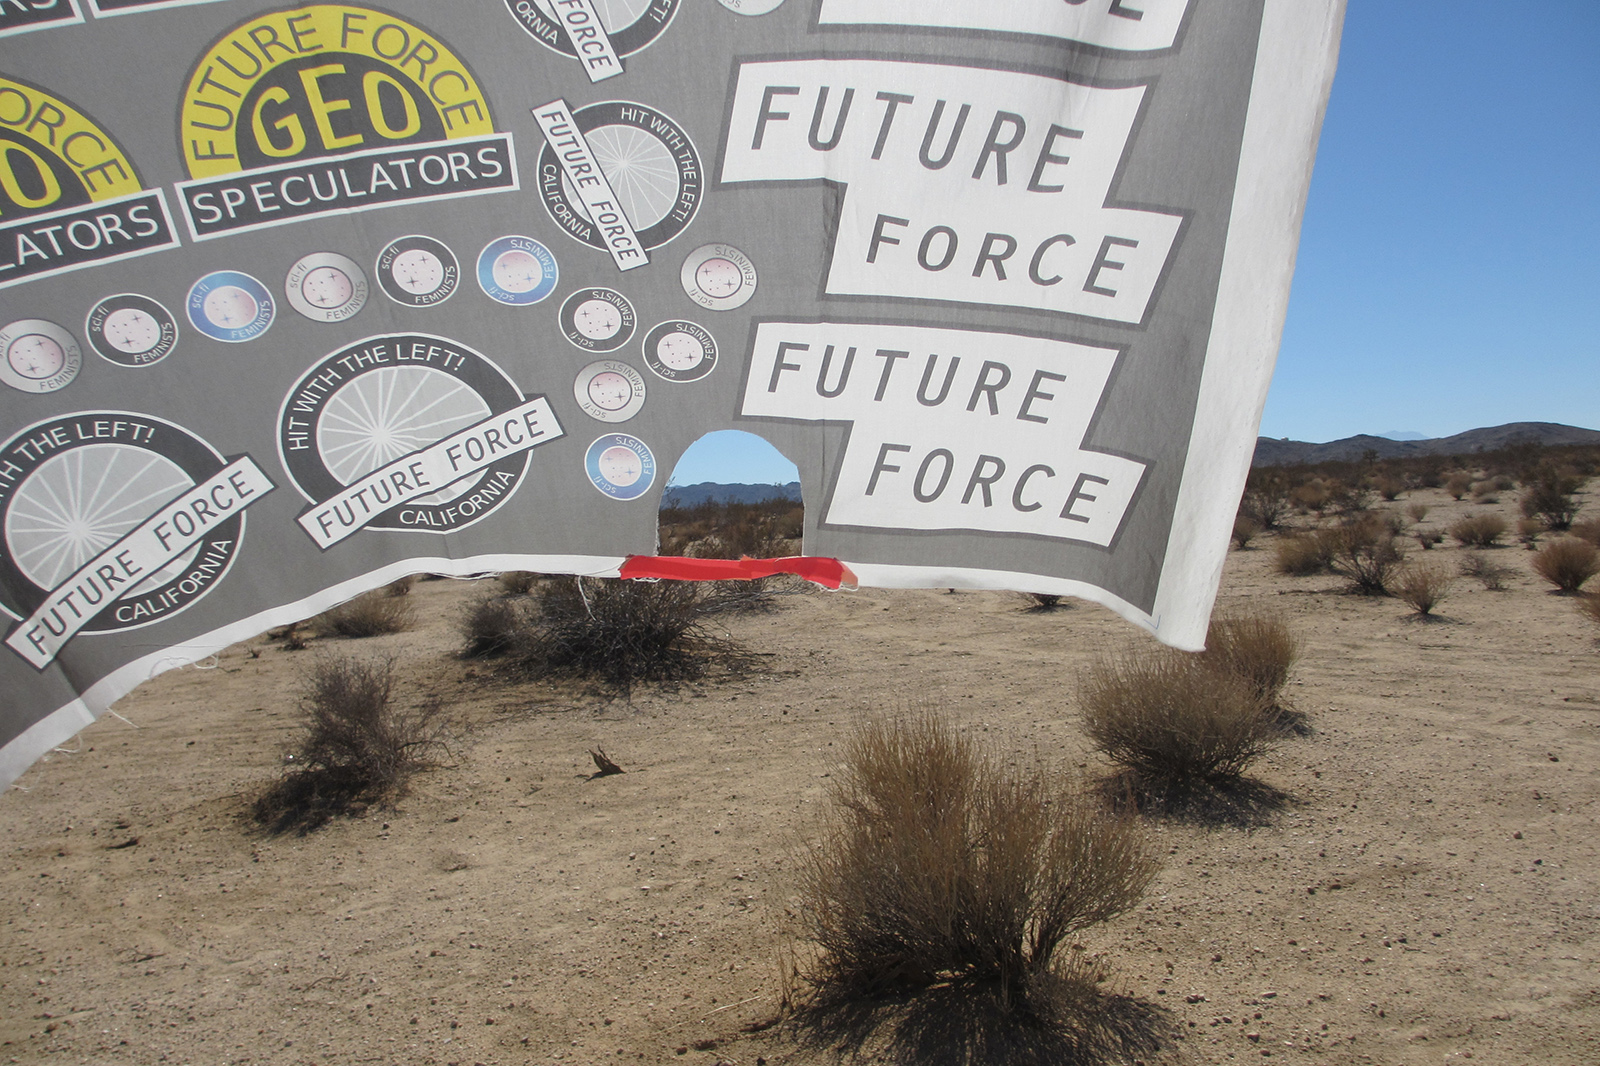  Future Force Geo Speculators (Carole Lung, Ellen Rothenberg, and Christine Tarkowski) CARPA Symposium at Joshua Tree, California, 2013, Flag 